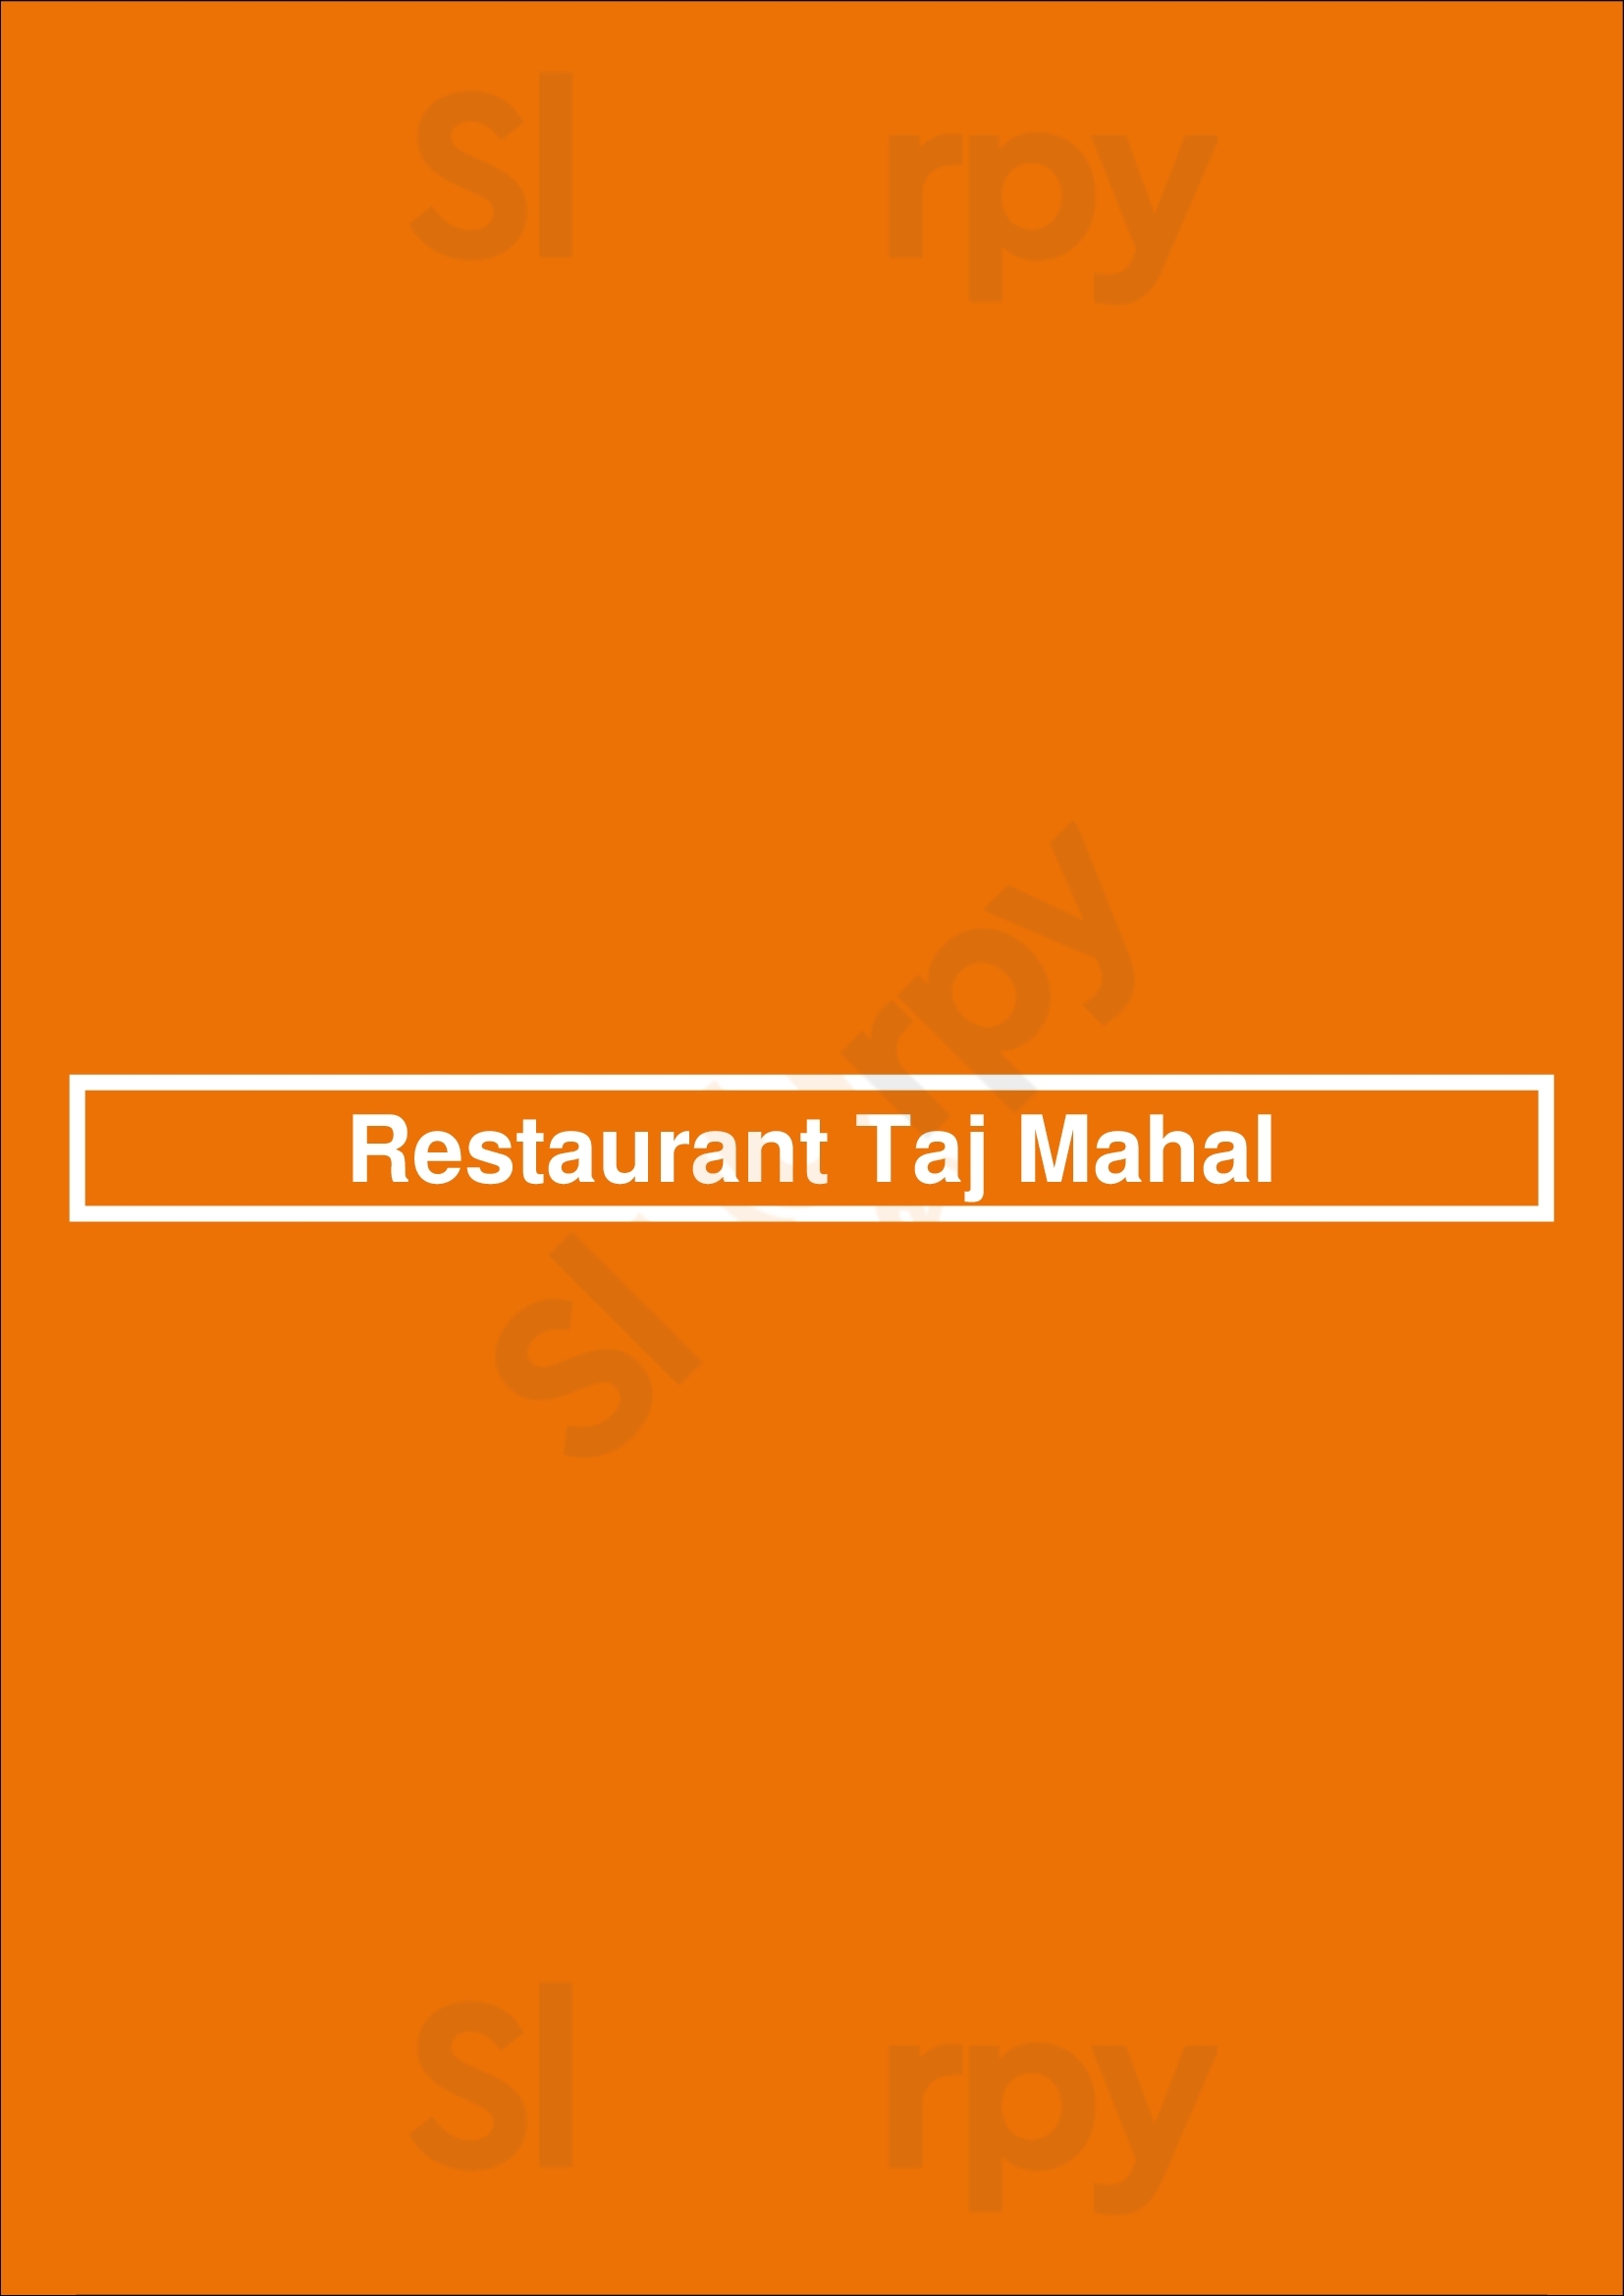 Restaurant Taj Mahal Rotterdam Menu - 1